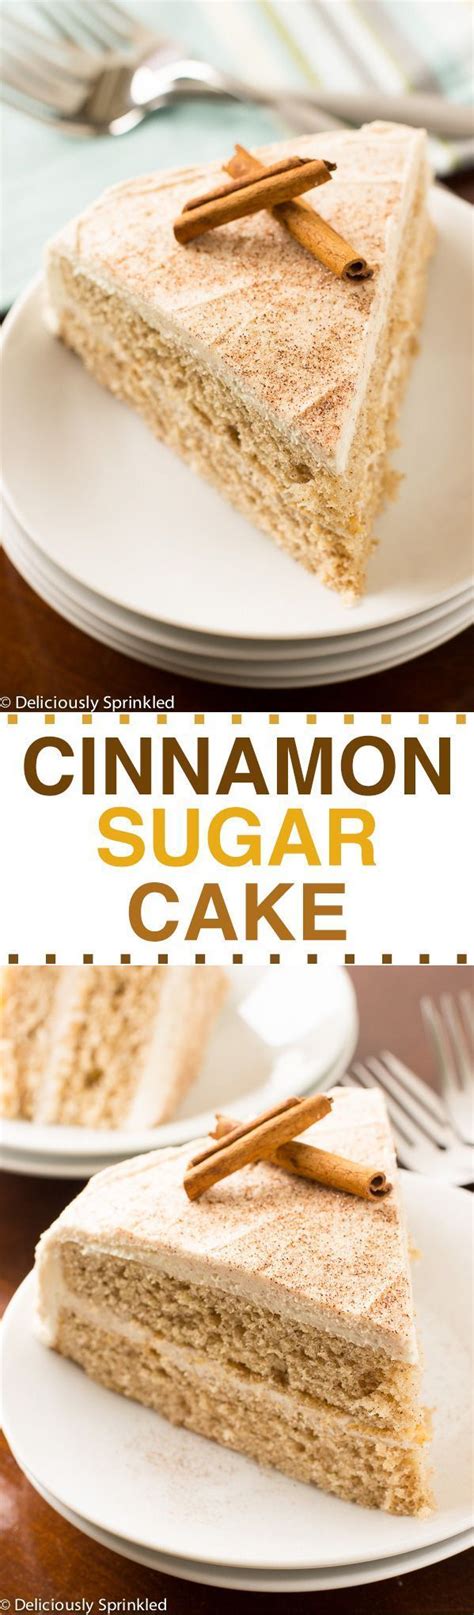 Www.huffingtonpost.com.visit this site for details: Cinnamon-Sugar Cake Recipe Thanksgiving Desserts ...